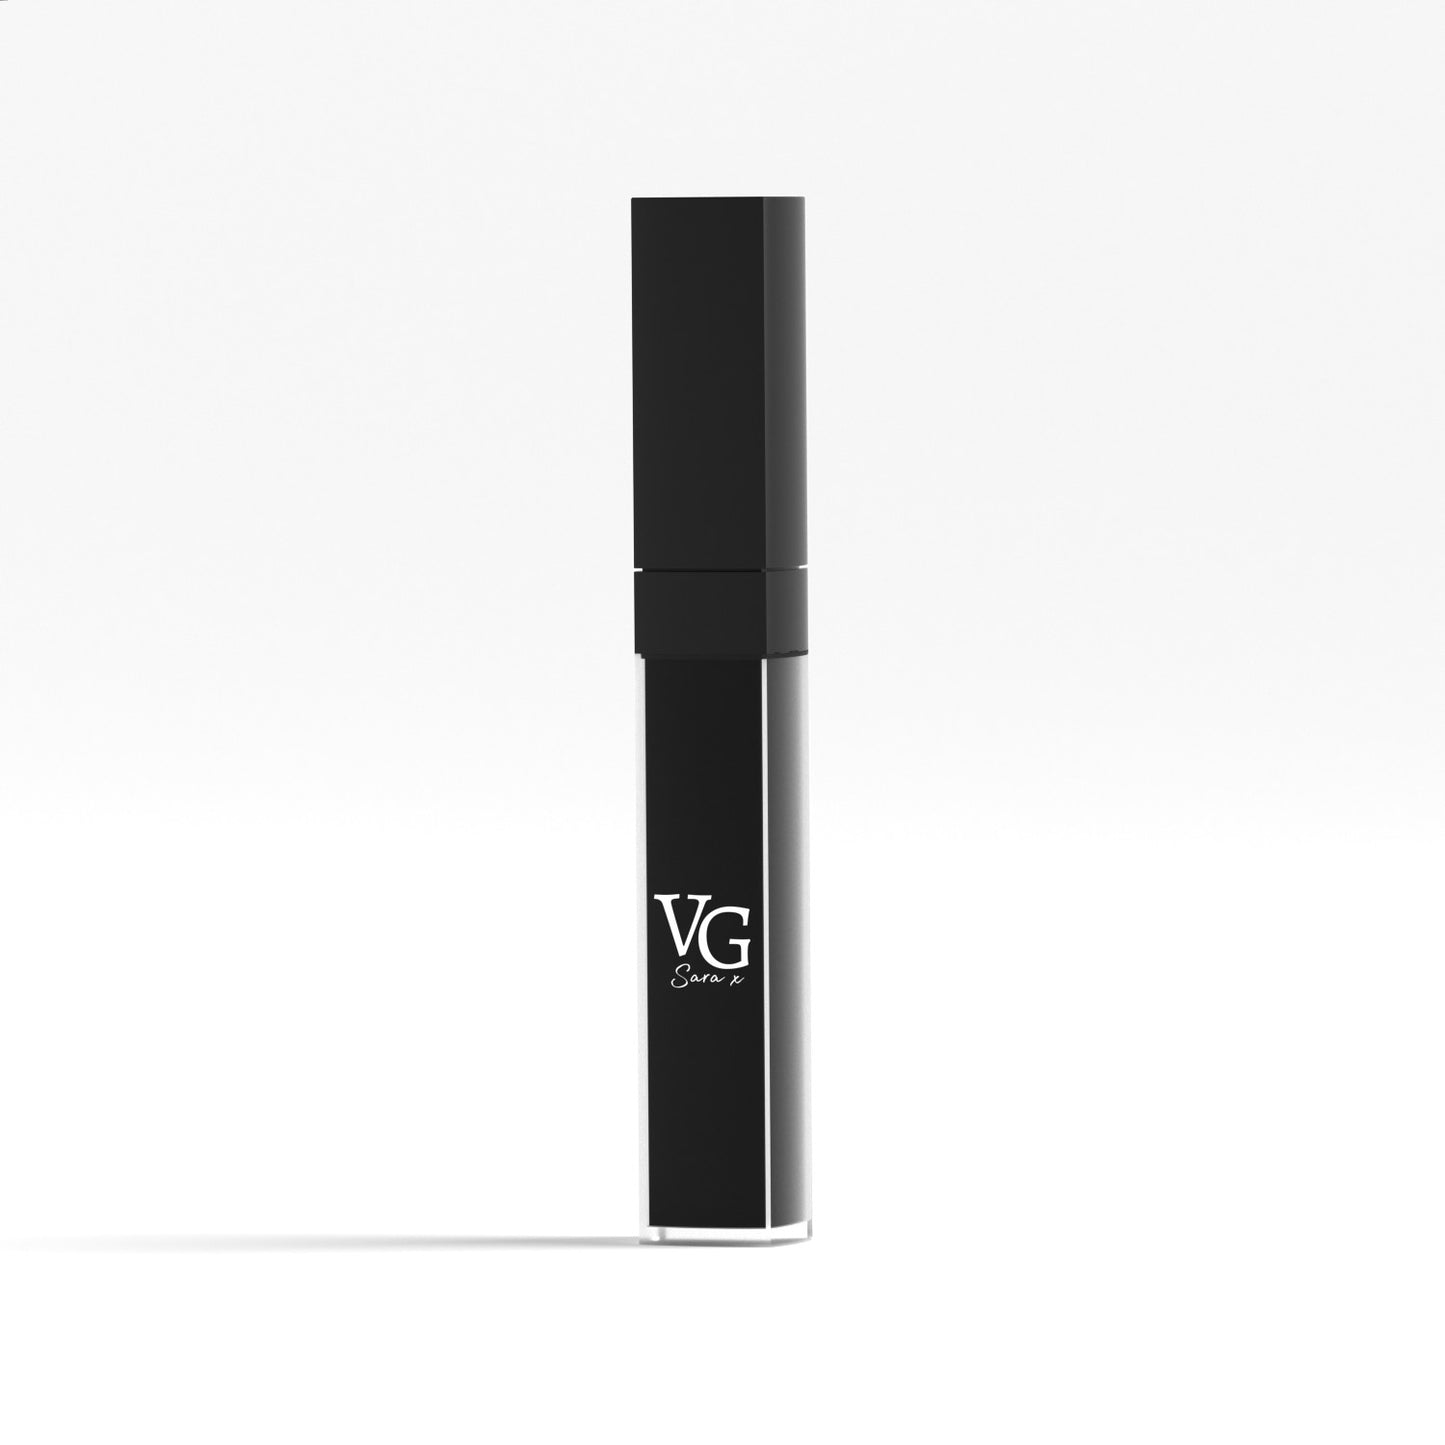 Black VG vegan liquid lipstick with distinctive packaging